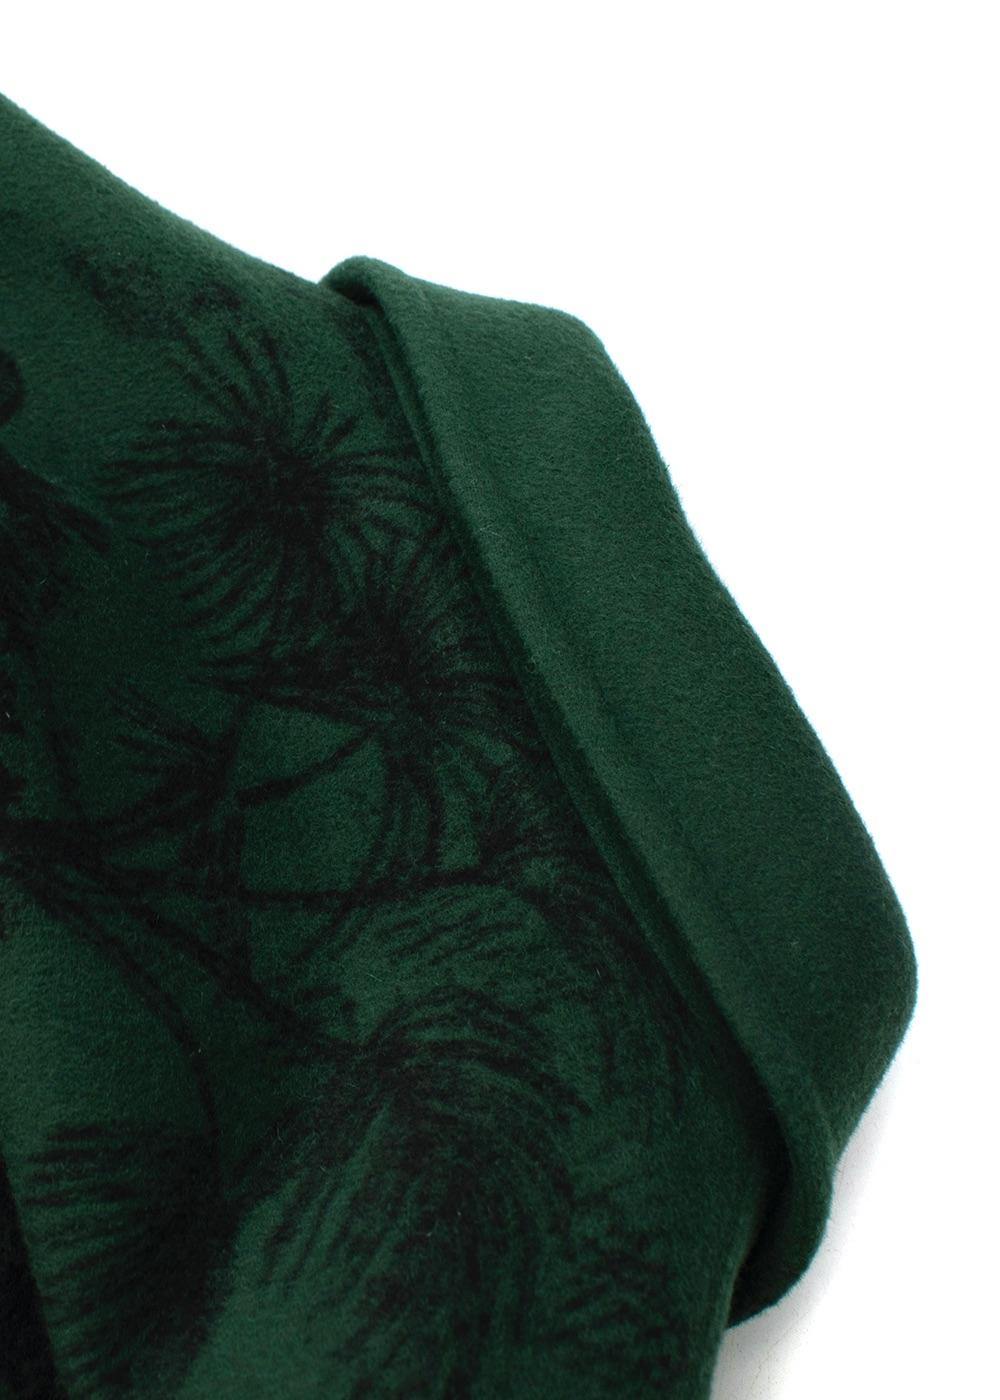 Palm Printed Dark Green Felt Jacket For Sale 2